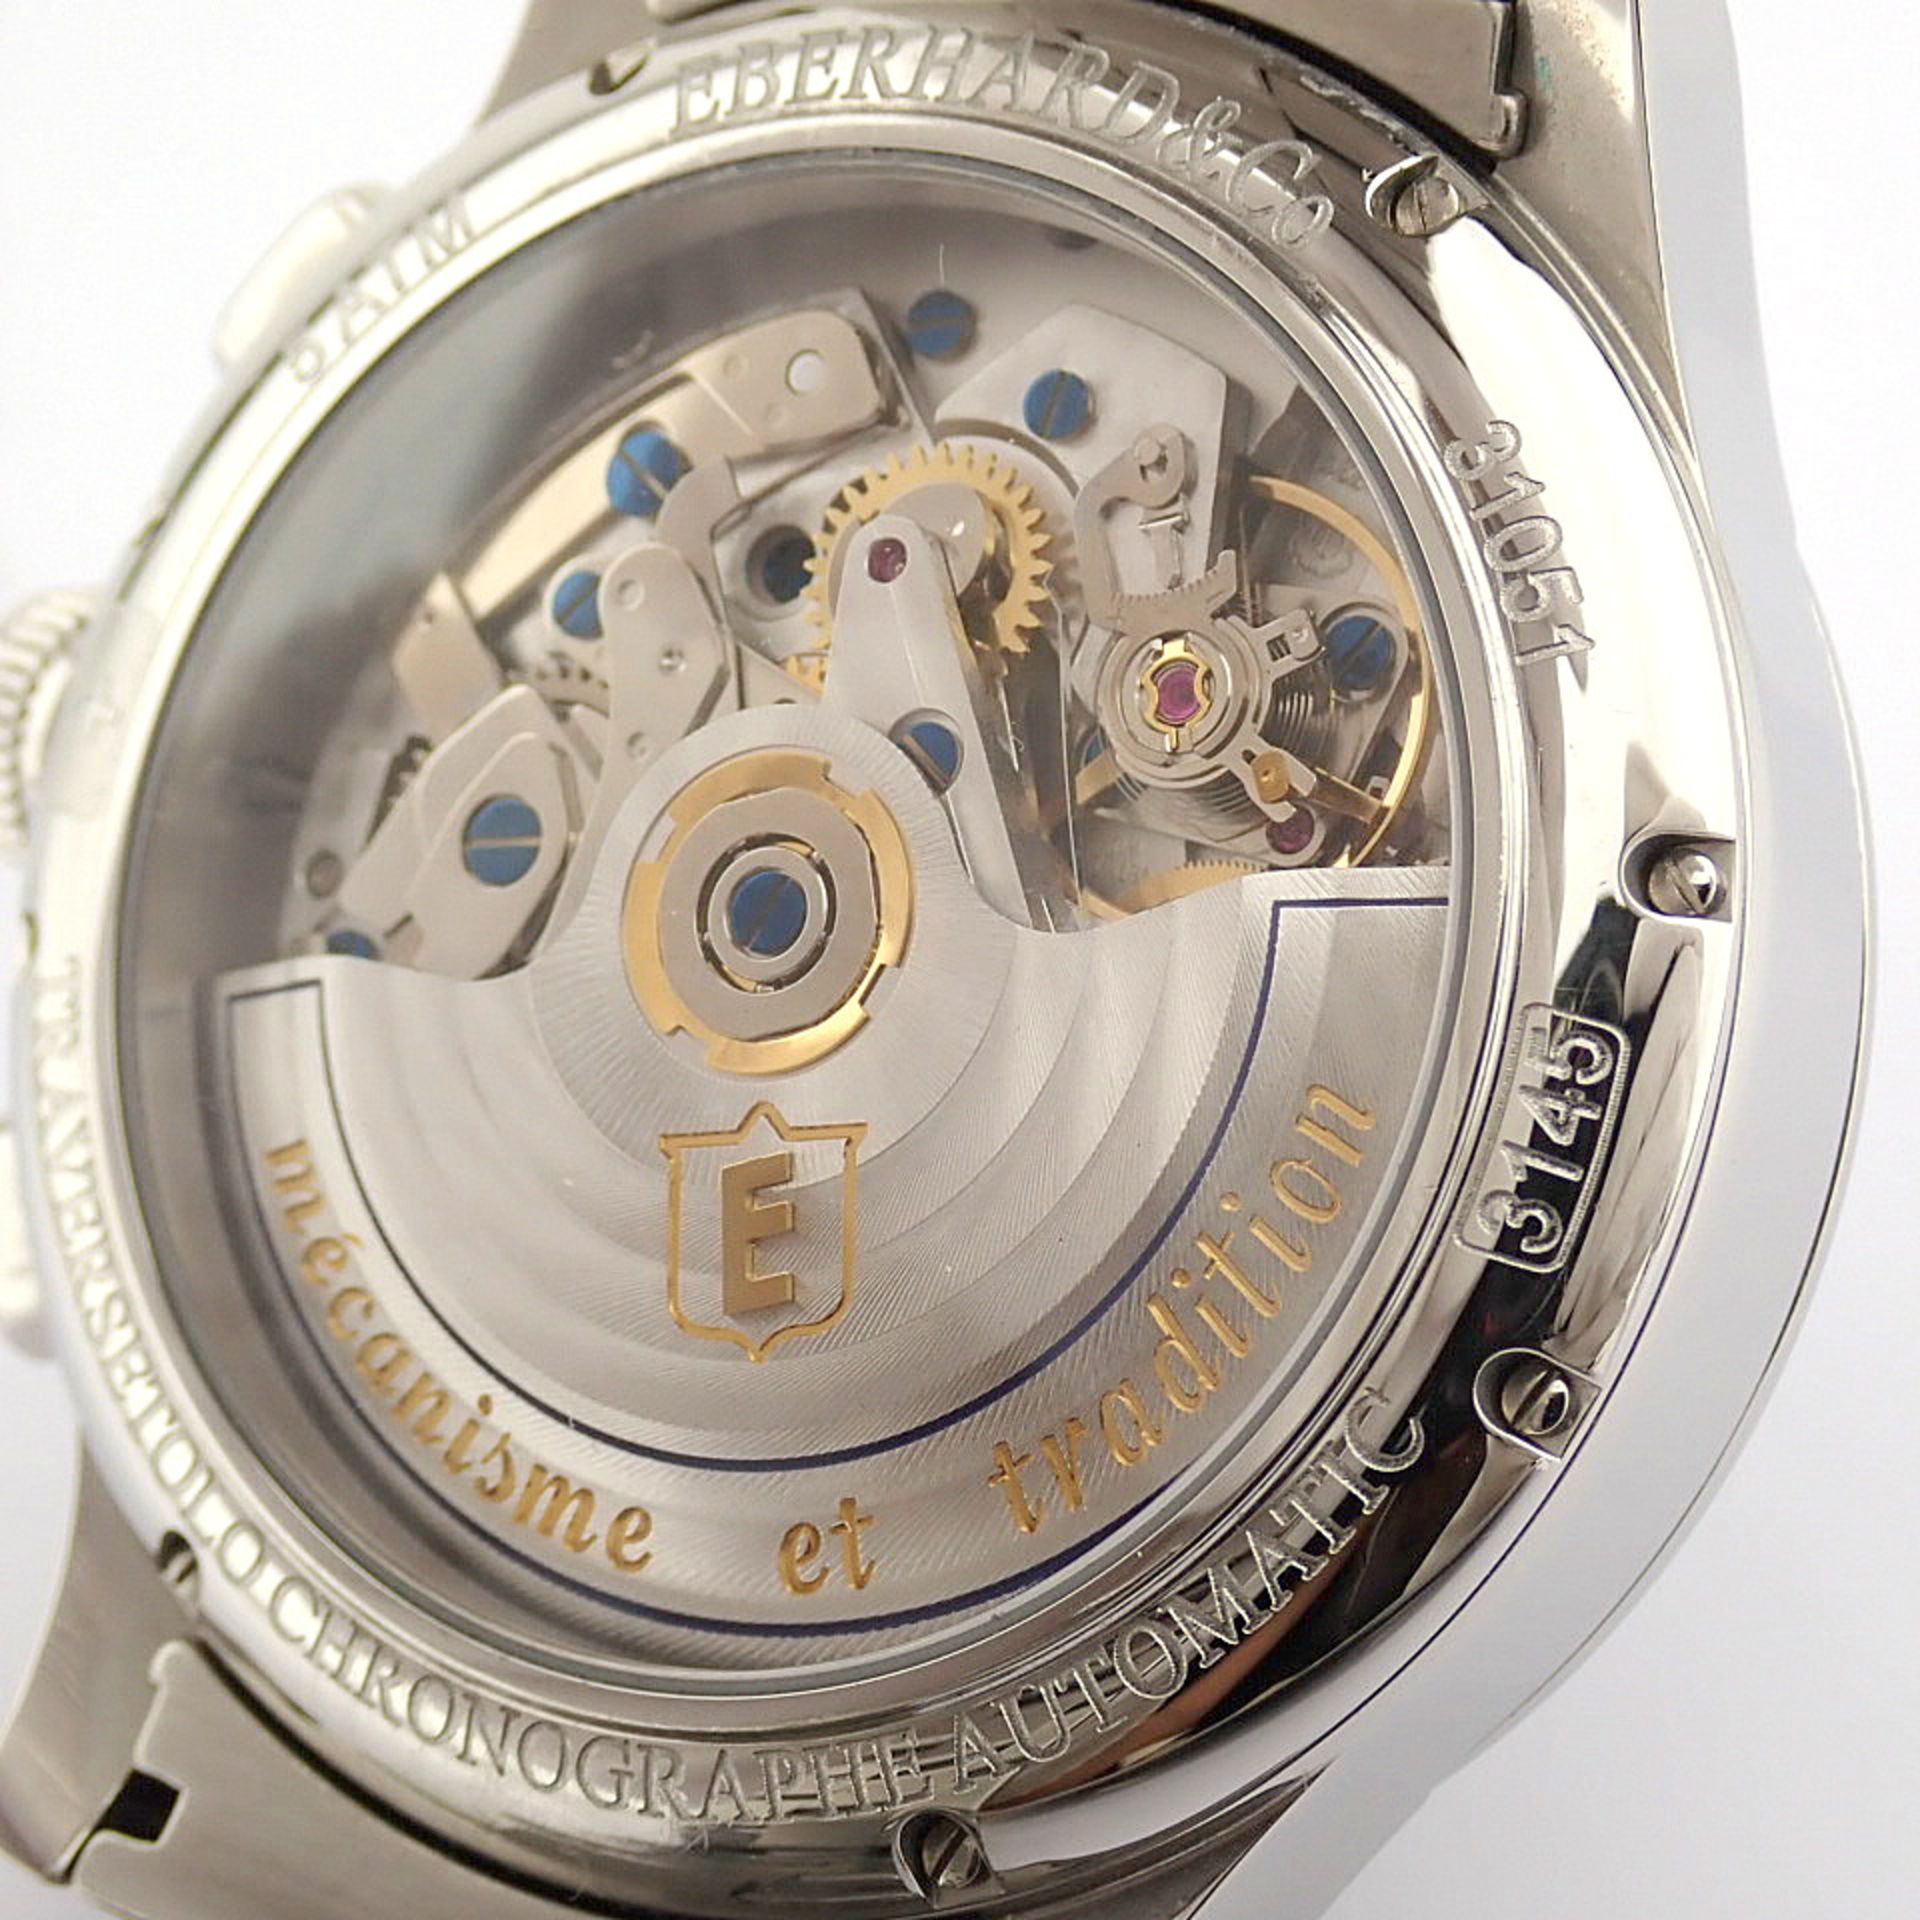 Eberhard & Co. / Traversetolo Chronograph Automatic - Gentlmen's Steel Wrist Watch - Image 9 of 11